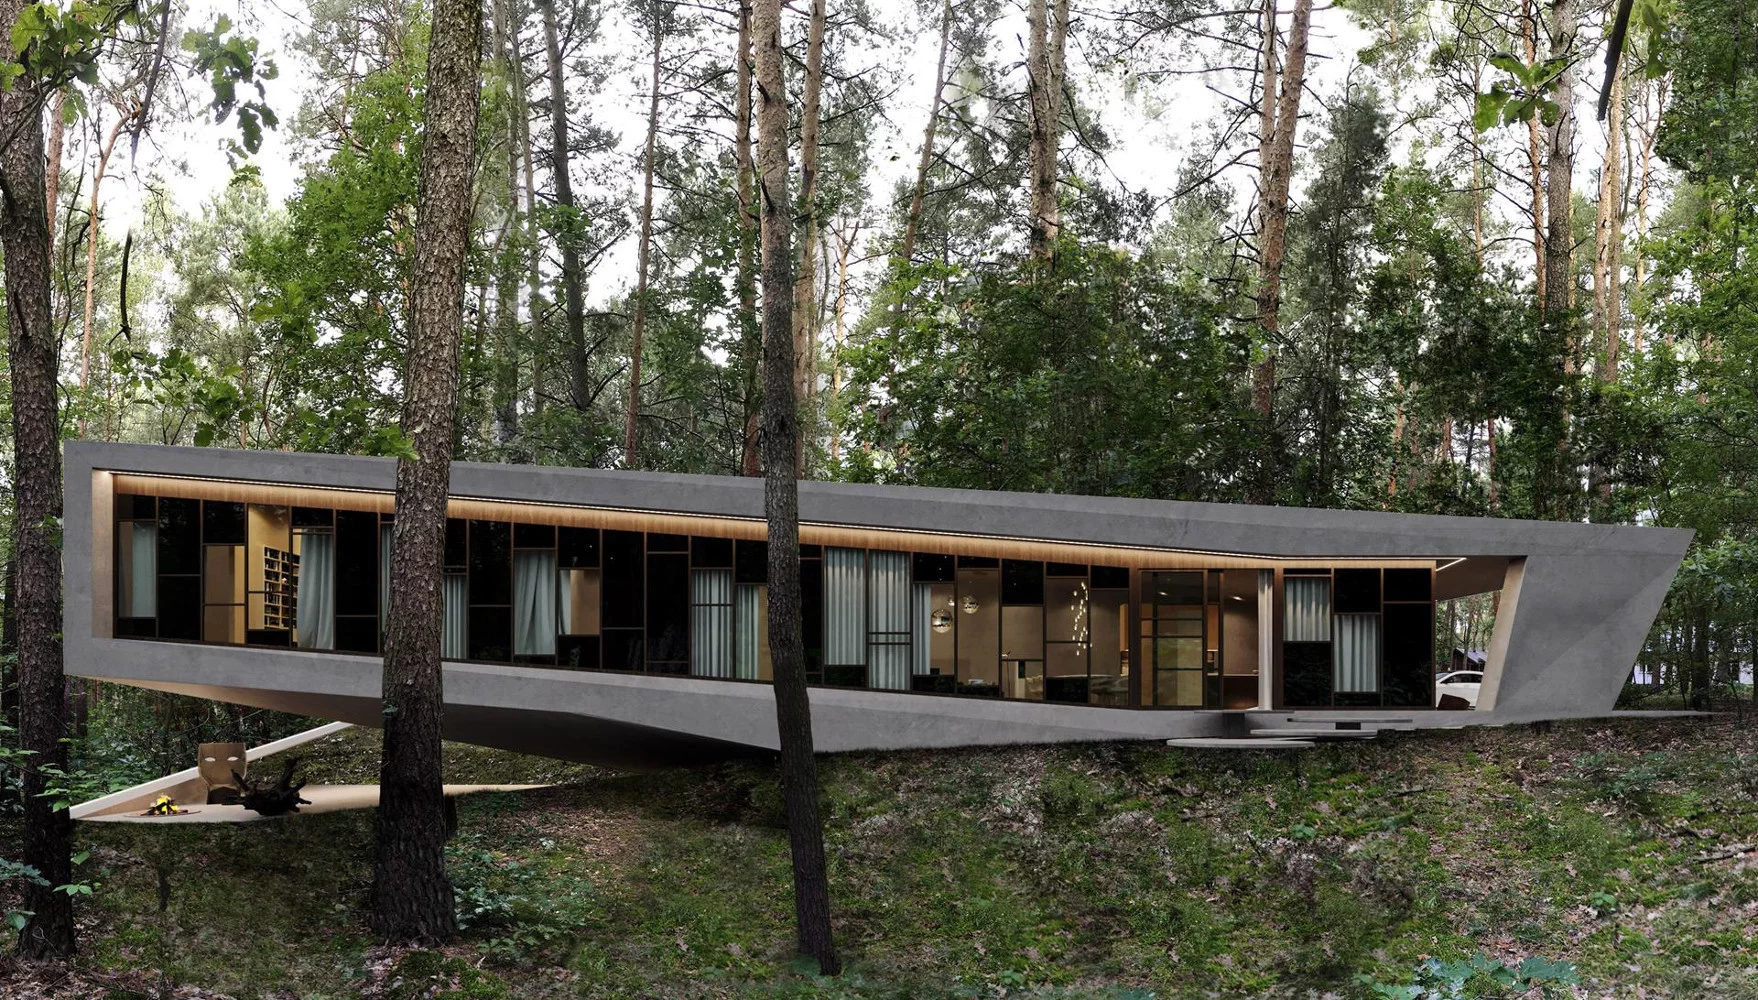 RE: JOSHUA TREE HOUSE,, projektu architekta Marcina Tomaszewskiego, REFORM Architekt